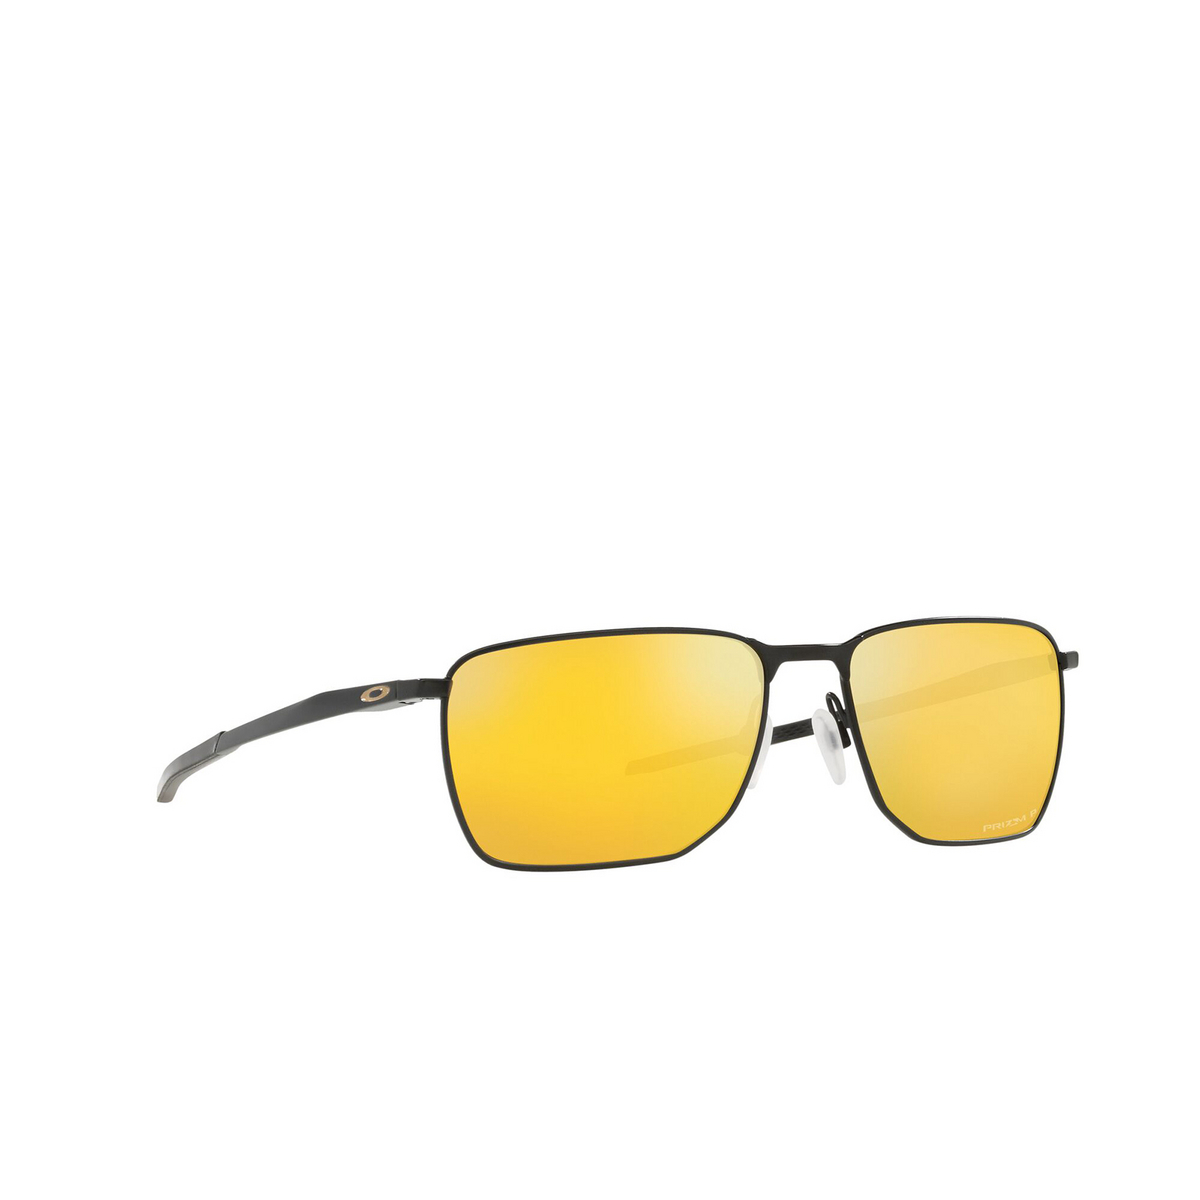 Oakley® Rectangle Sunglasses: OO4142 Ejector color 414214 Satin Black - three-quarters view